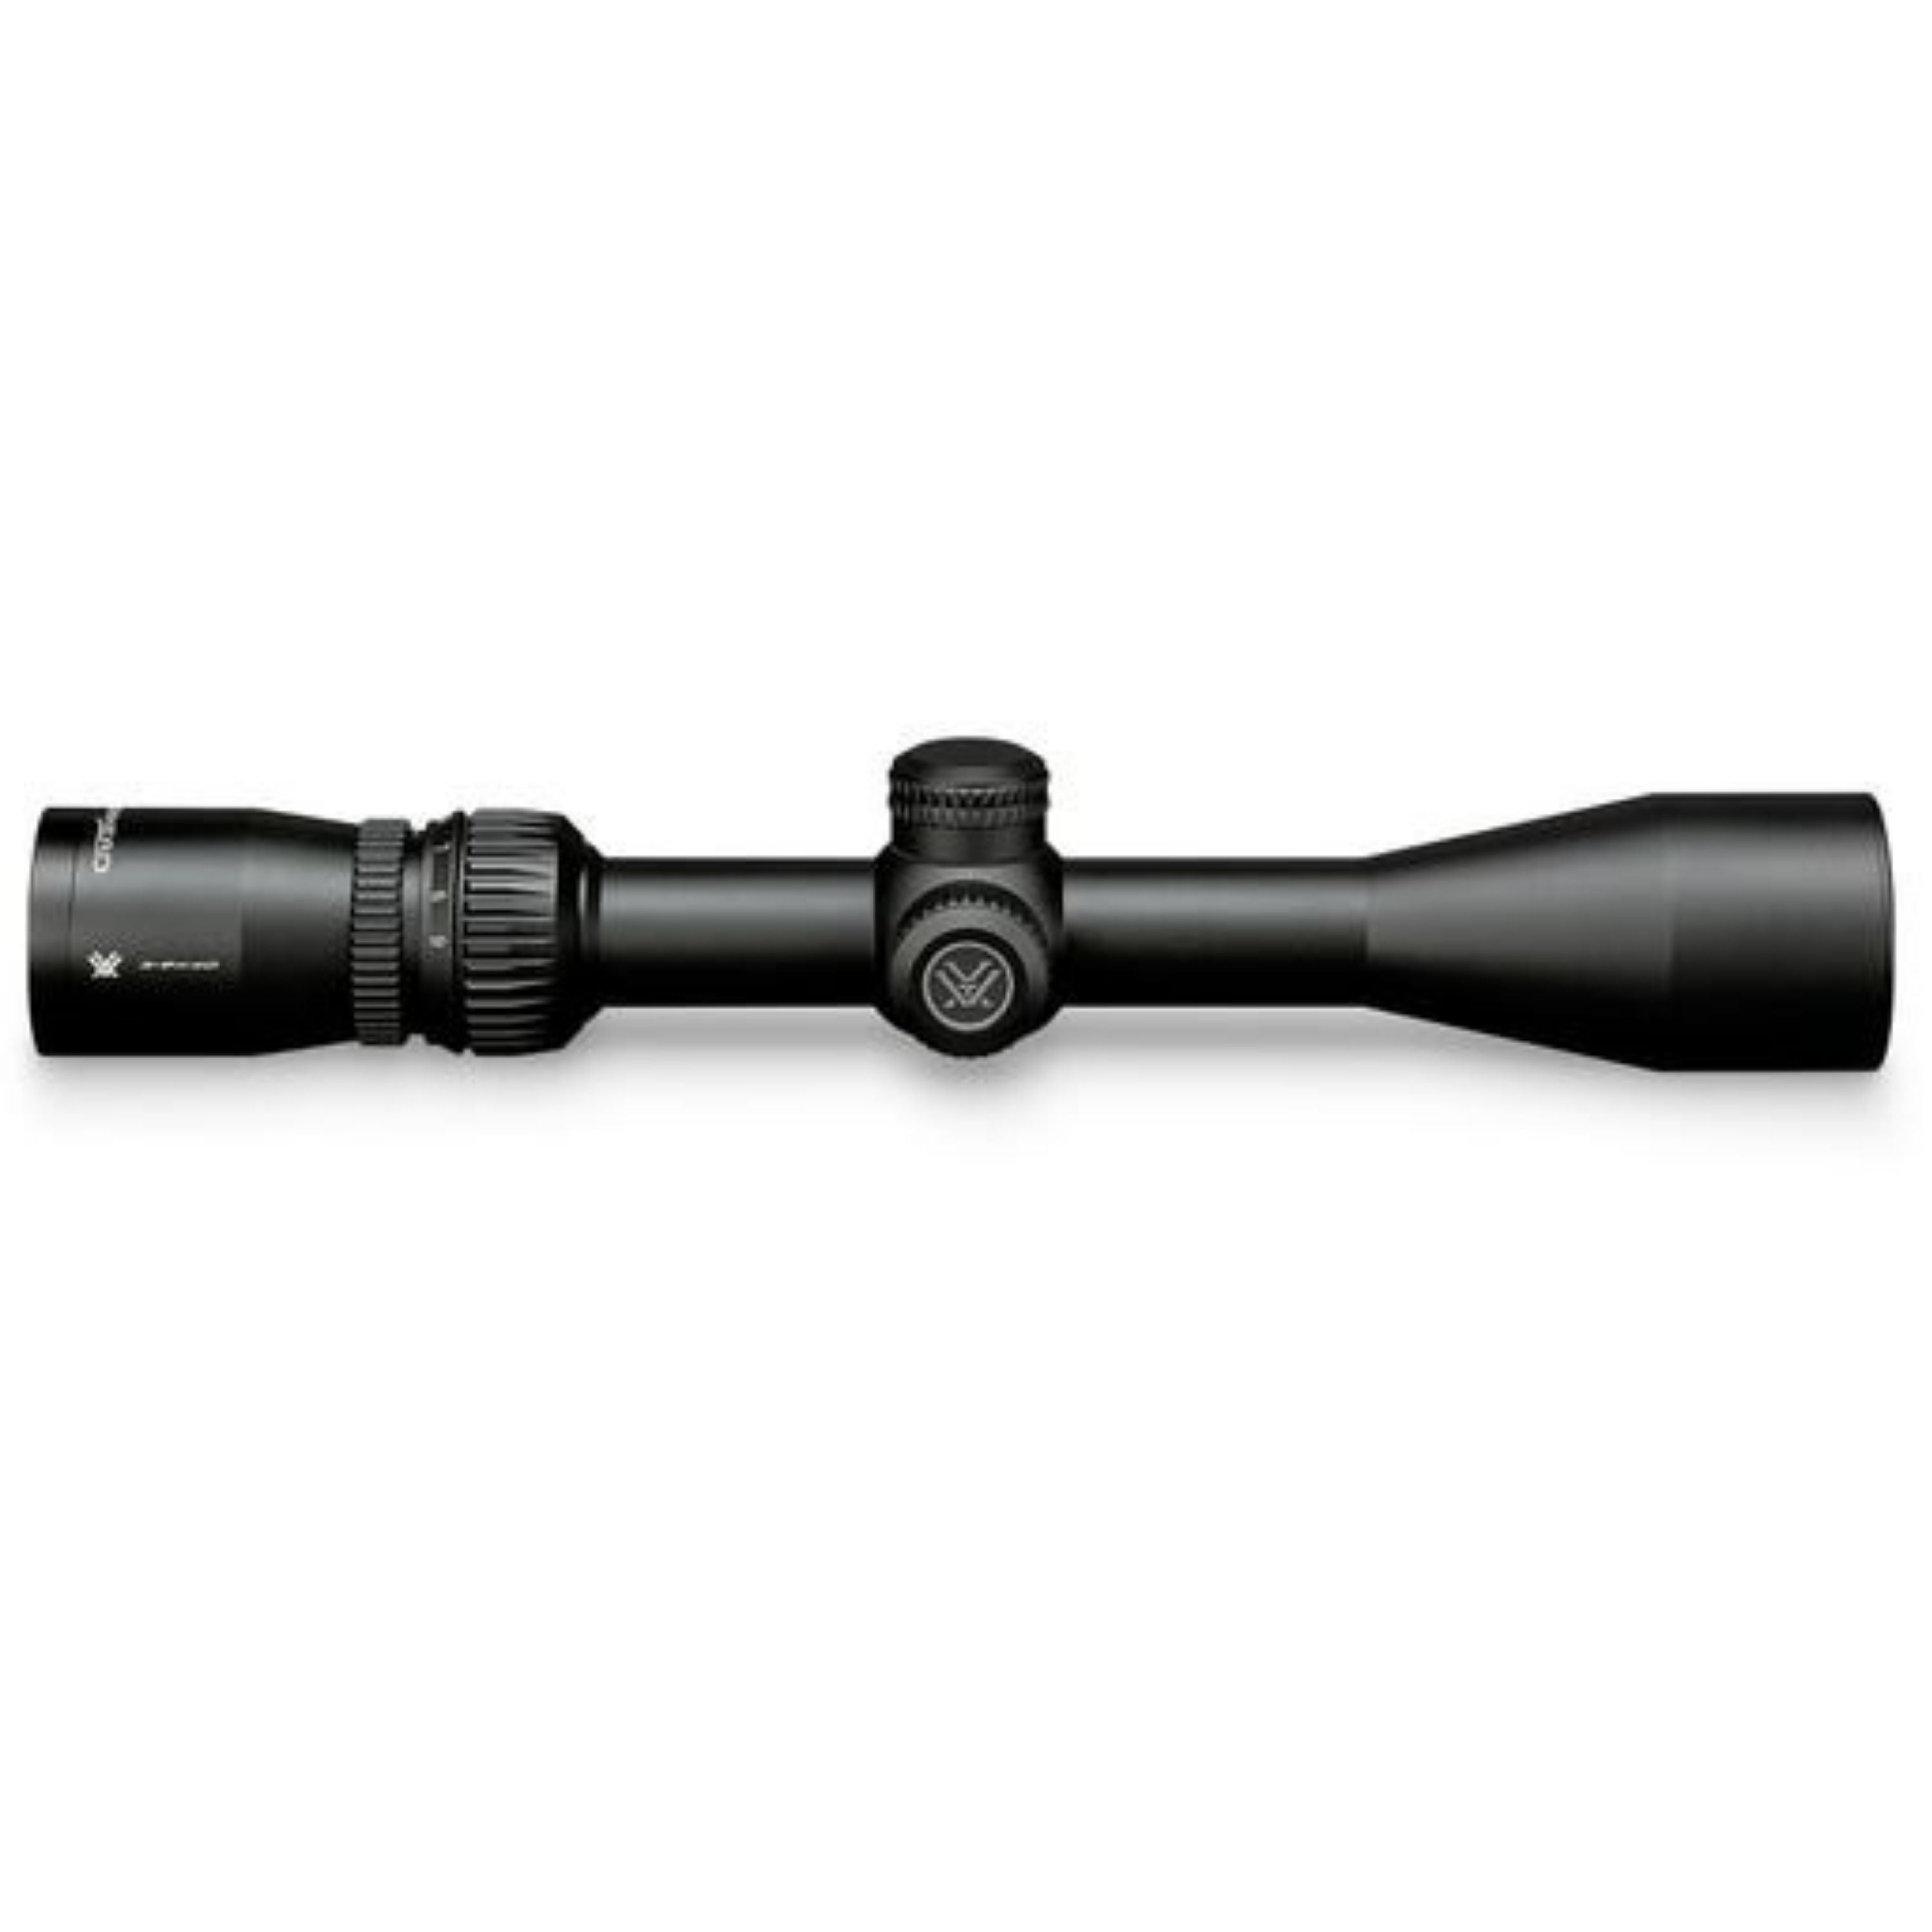 Télescope "Copperhead" 3-9 X 40 mm BDC||"Copperhead" 3-9X40 mm BDC Riflescope